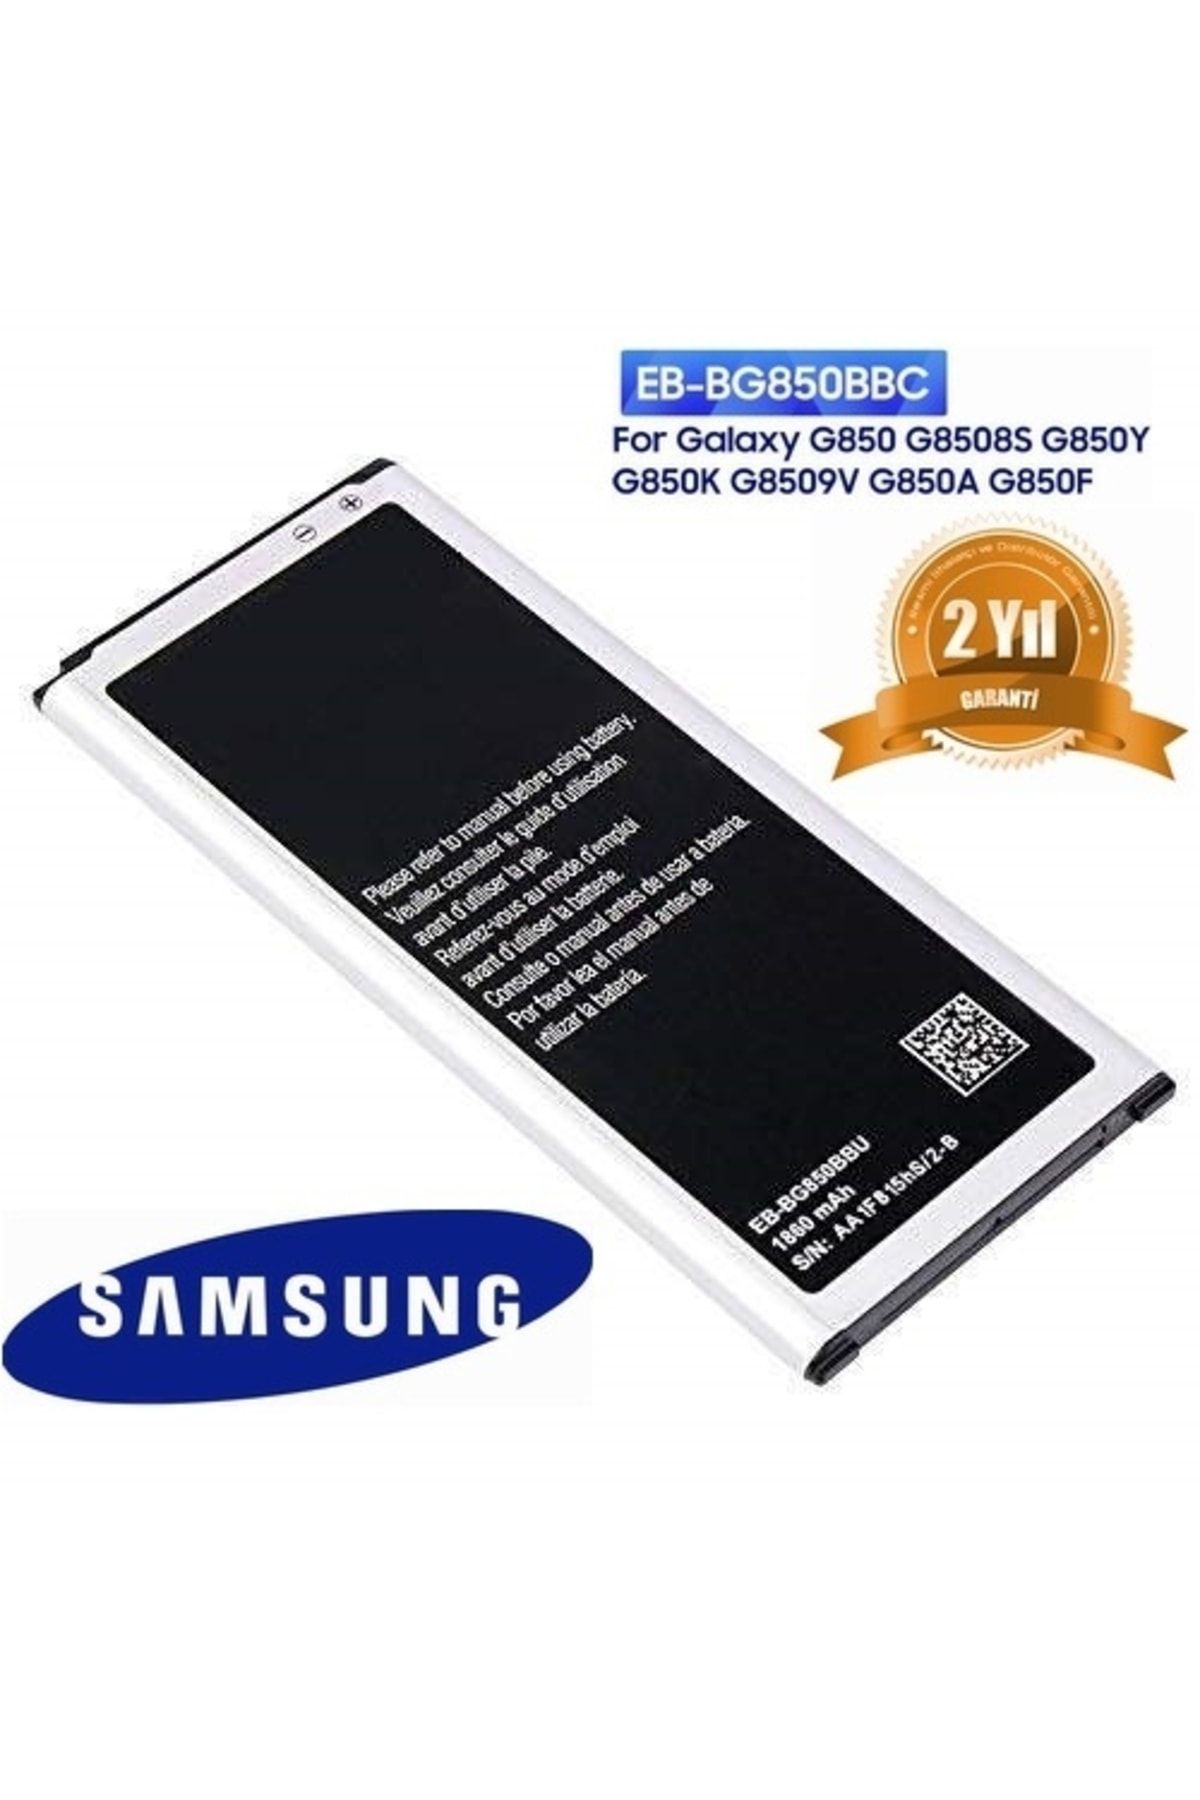 Genel Markalar Samsung Galaxy Alpha G850f Eb-bg850bbc Eb-bg850bbu Eb-bg850bbe 1860mah Batarya Pil 2 Yıl Garanti